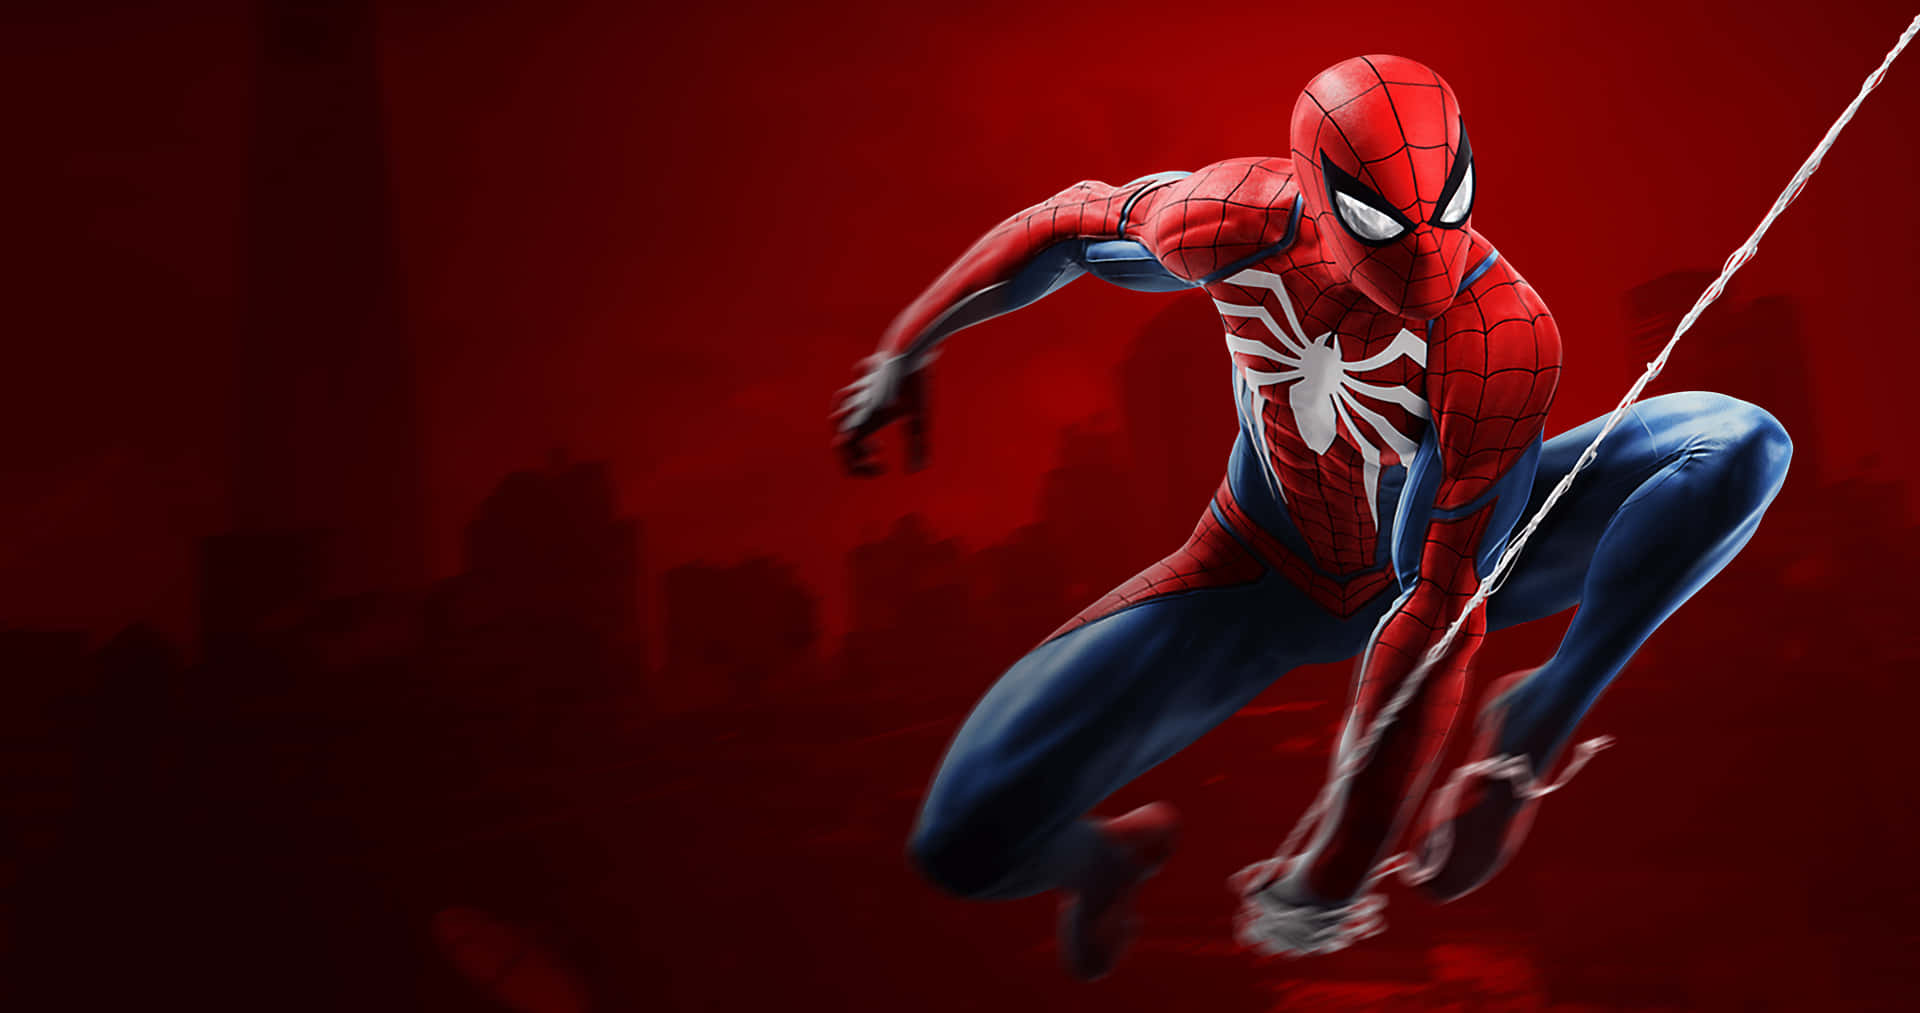 Spiderman Ps4 4k Web Jumping Red Background Translates To Spider-man Ps4 4k-webbhoppare Röd Bakgrund In Swedish. Wallpaper